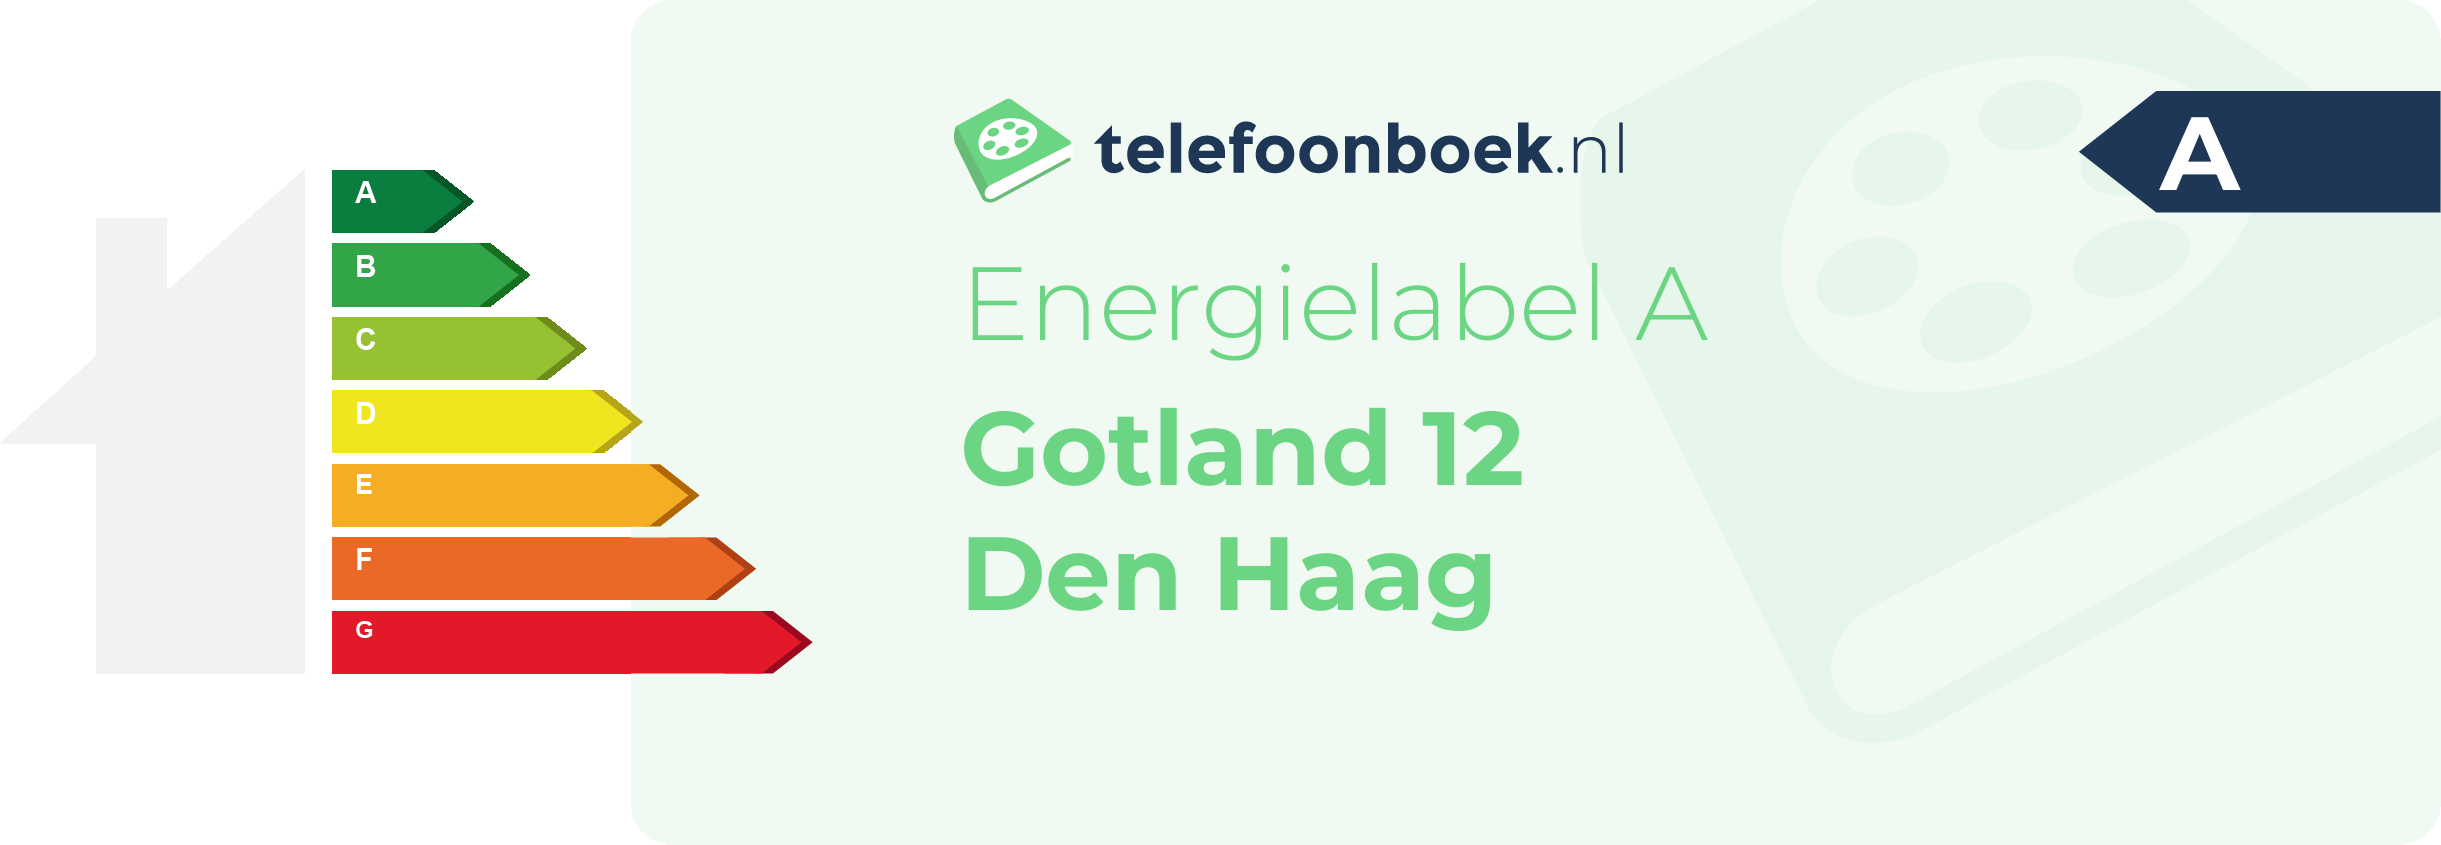 Energielabel Gotland 12 Den Haag